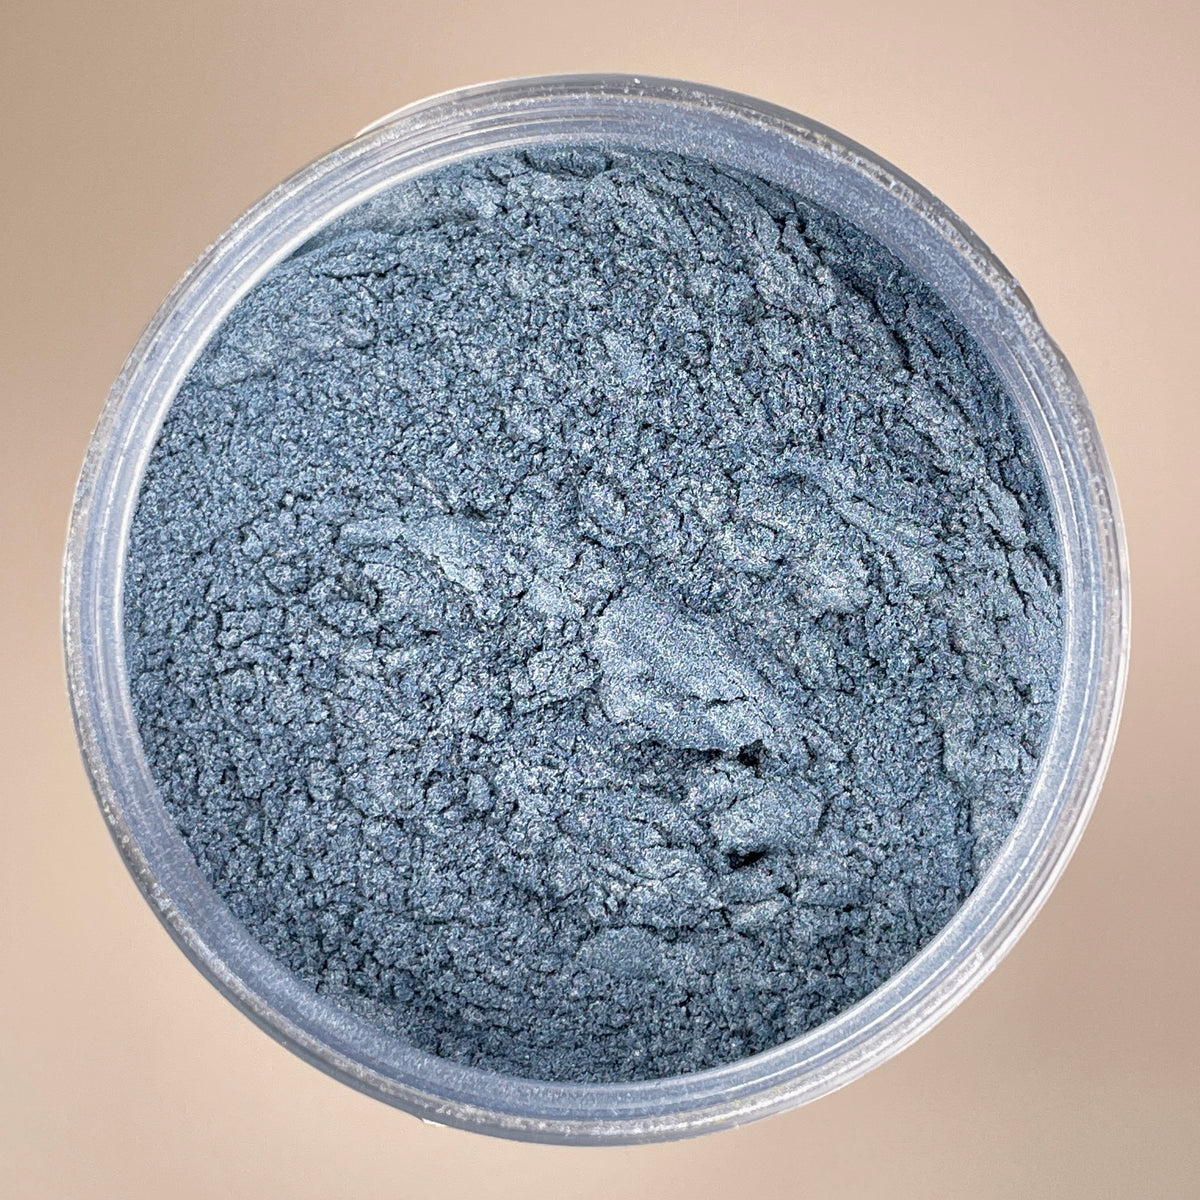 Cambridge Blue Mica Powder - Beaver Dust Pigments — Jeff Mack Supply